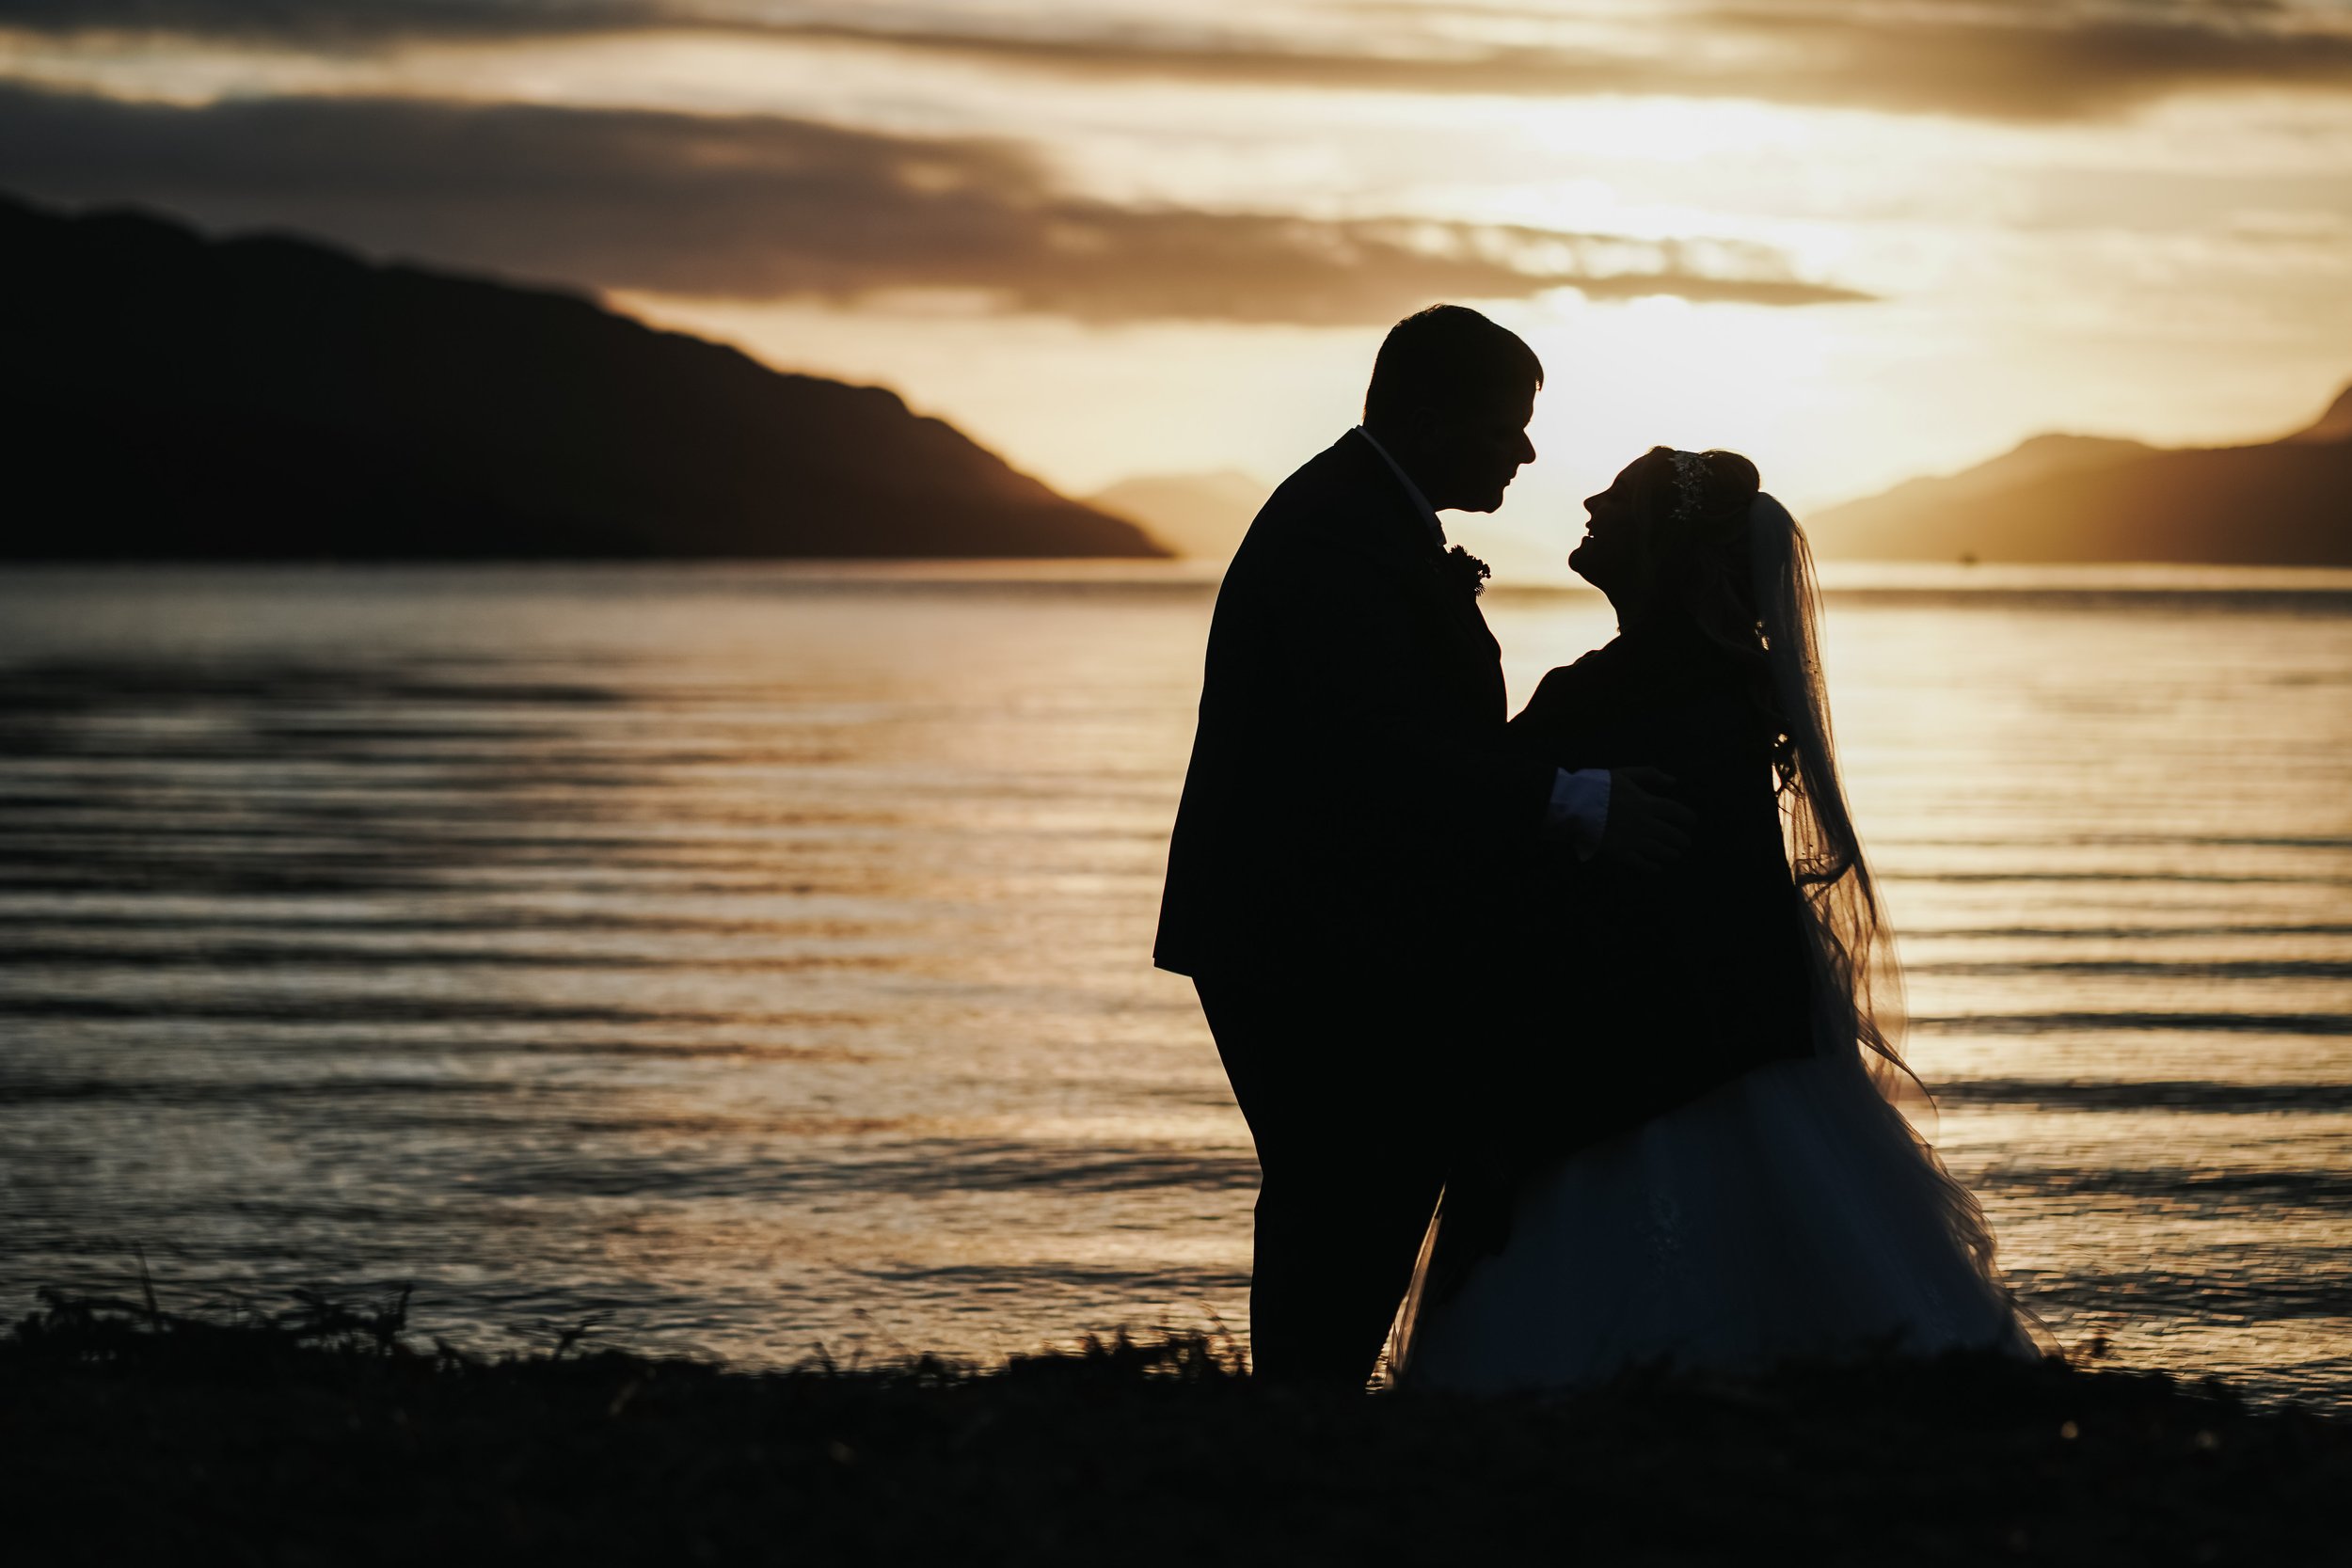 scottish highland elopement wedding photographer - 042.jpg